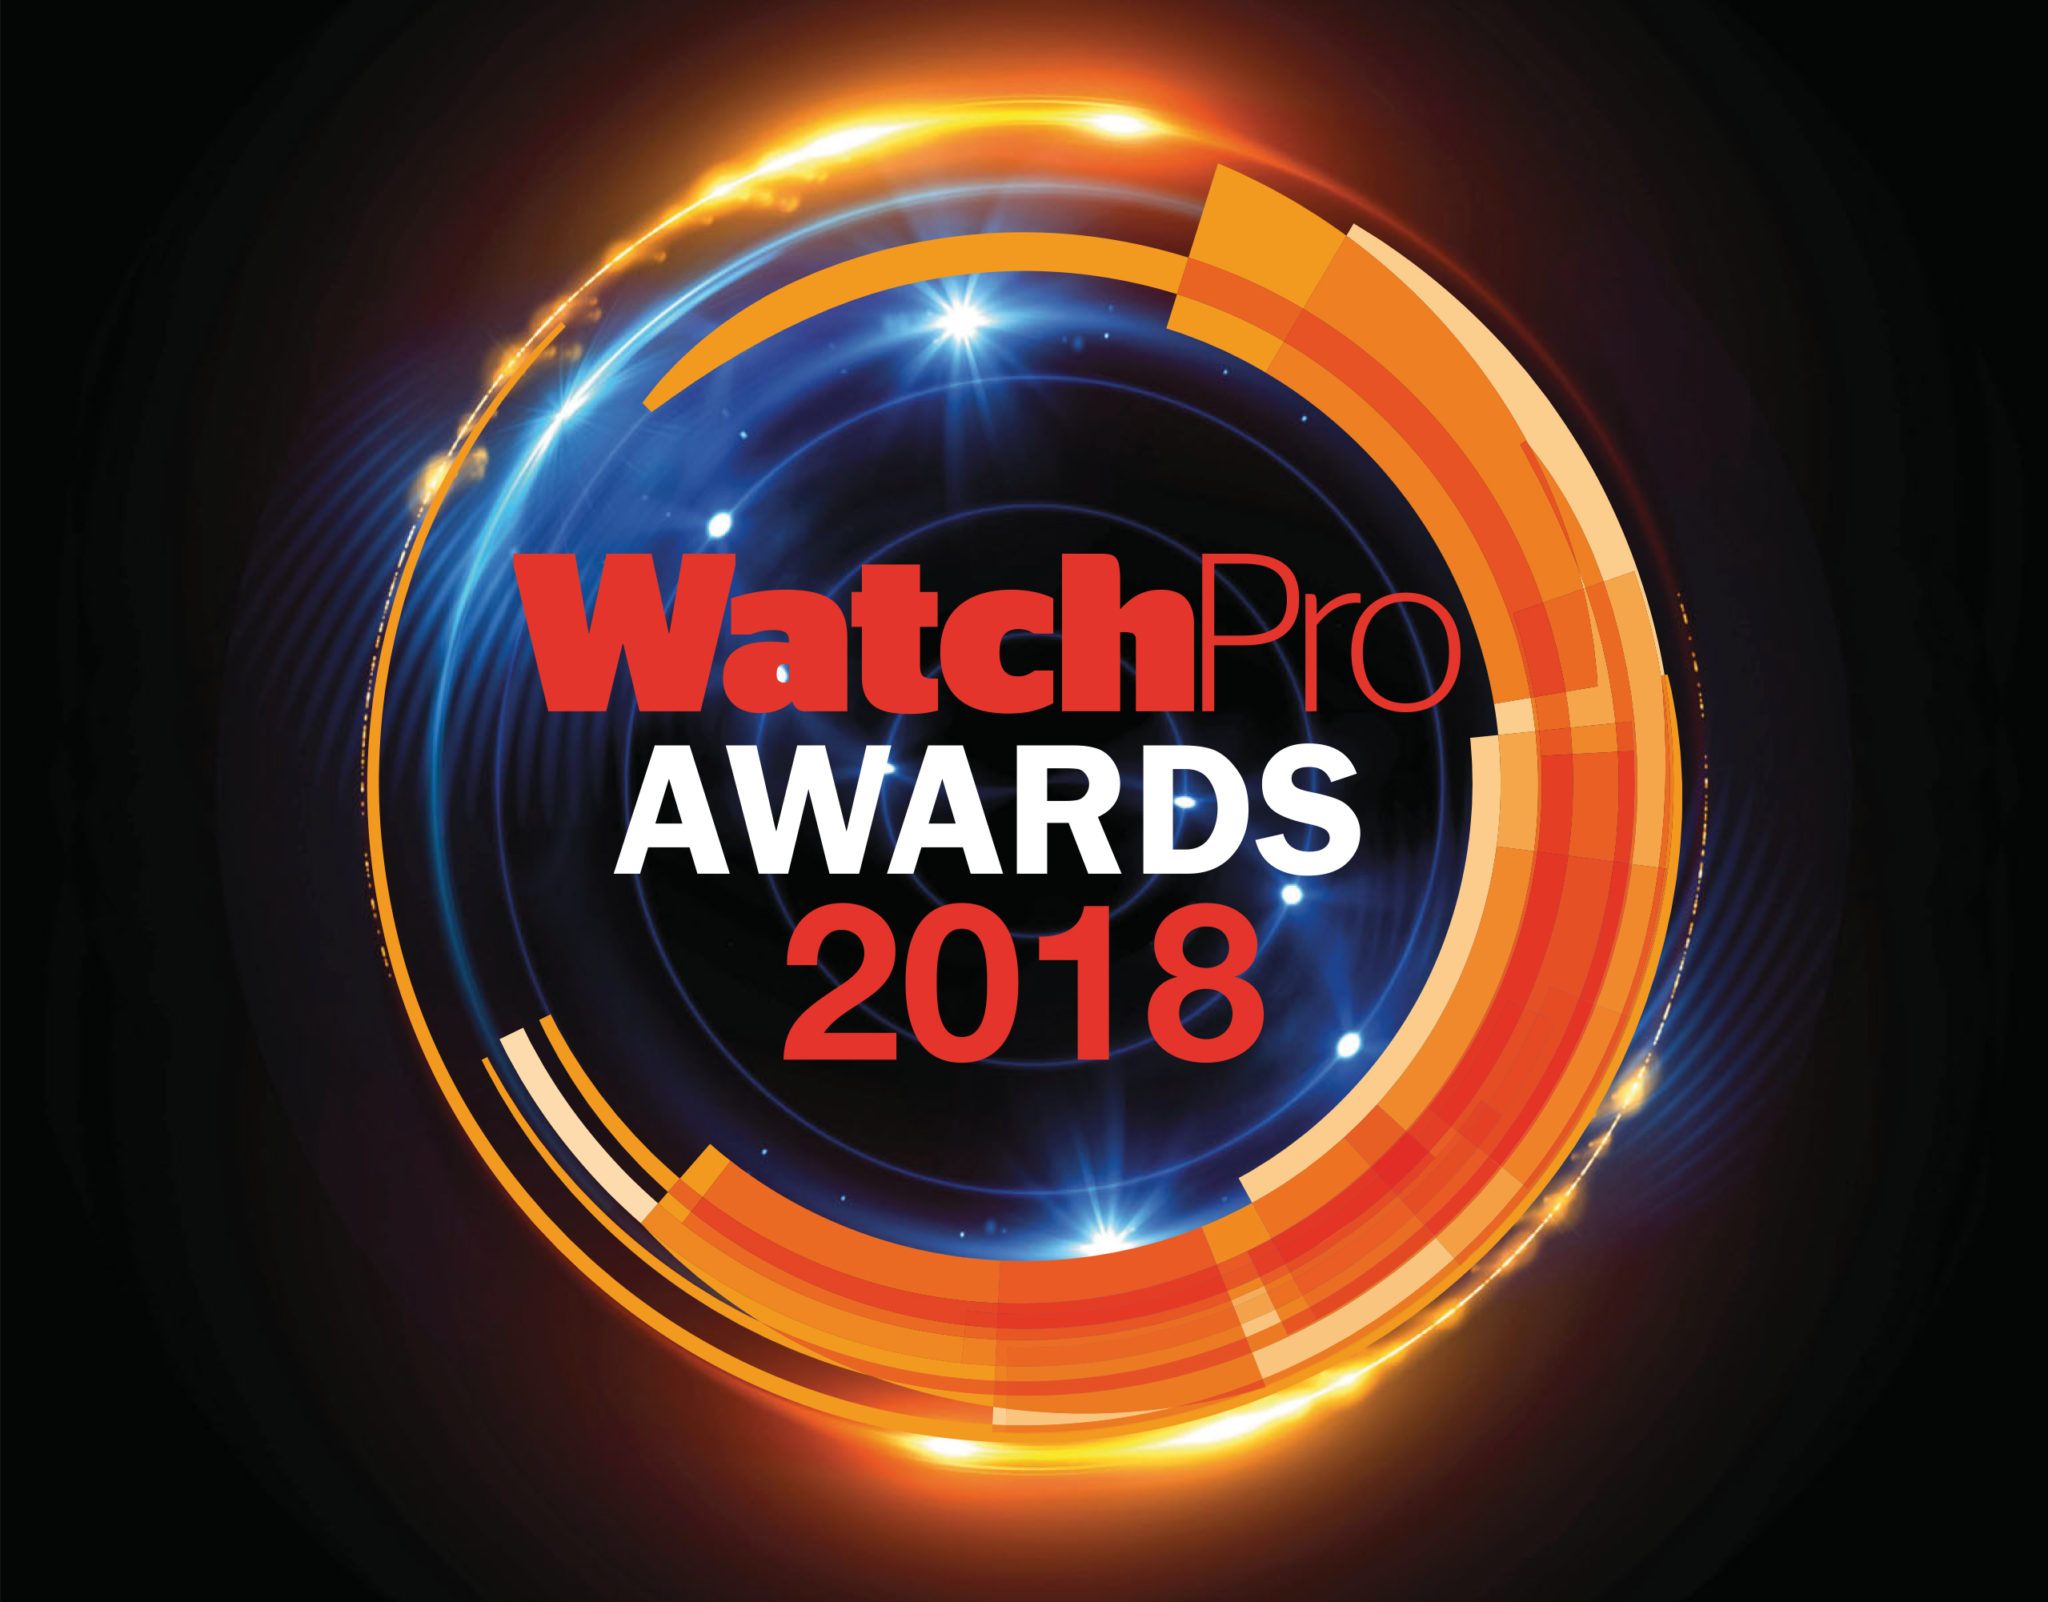 Watchpro awards logo